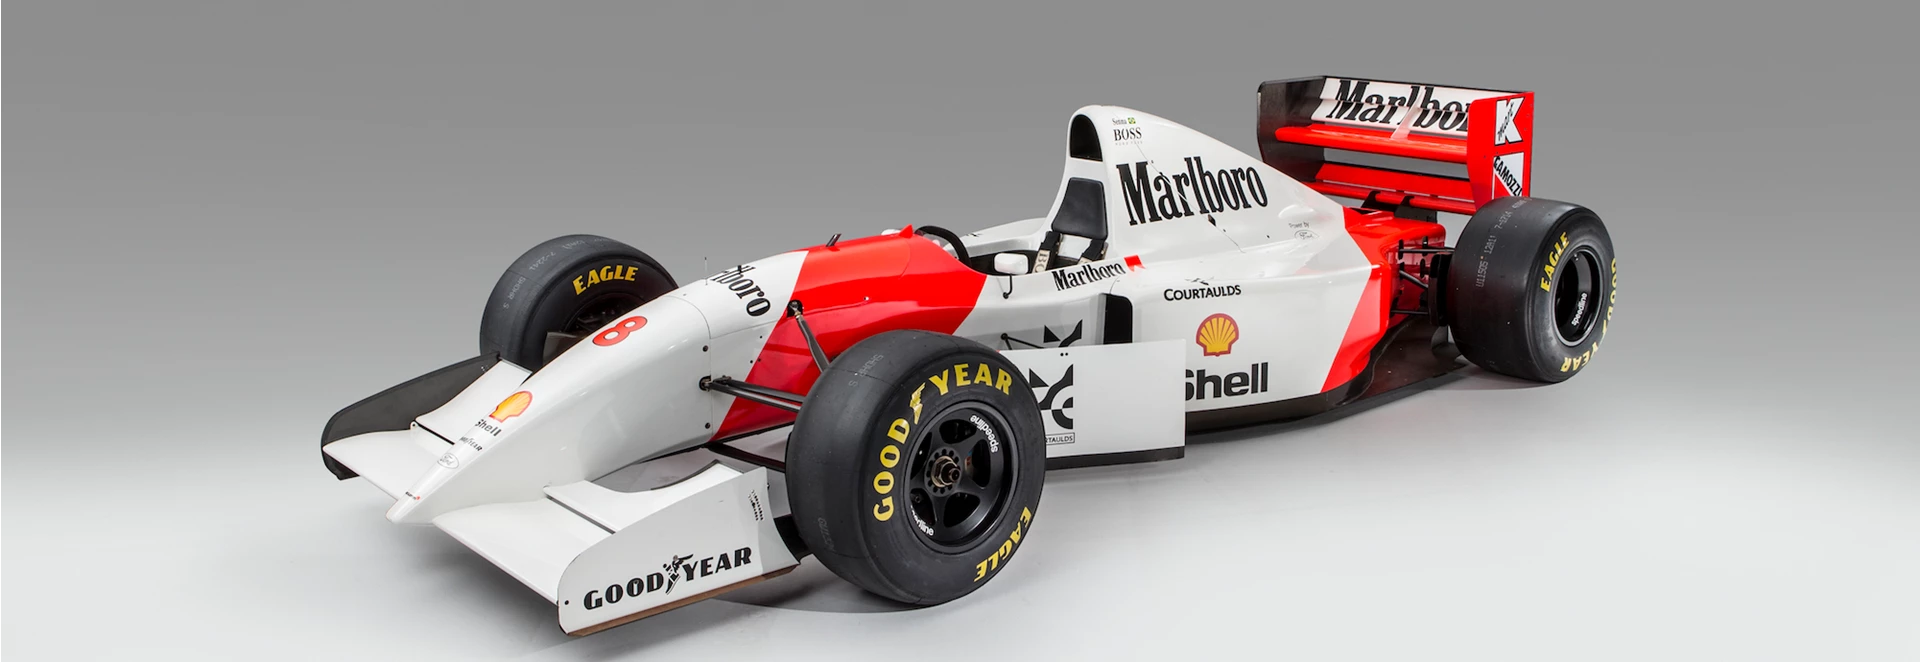 Two ex-Ayrton Senna Formula One cars head to auction